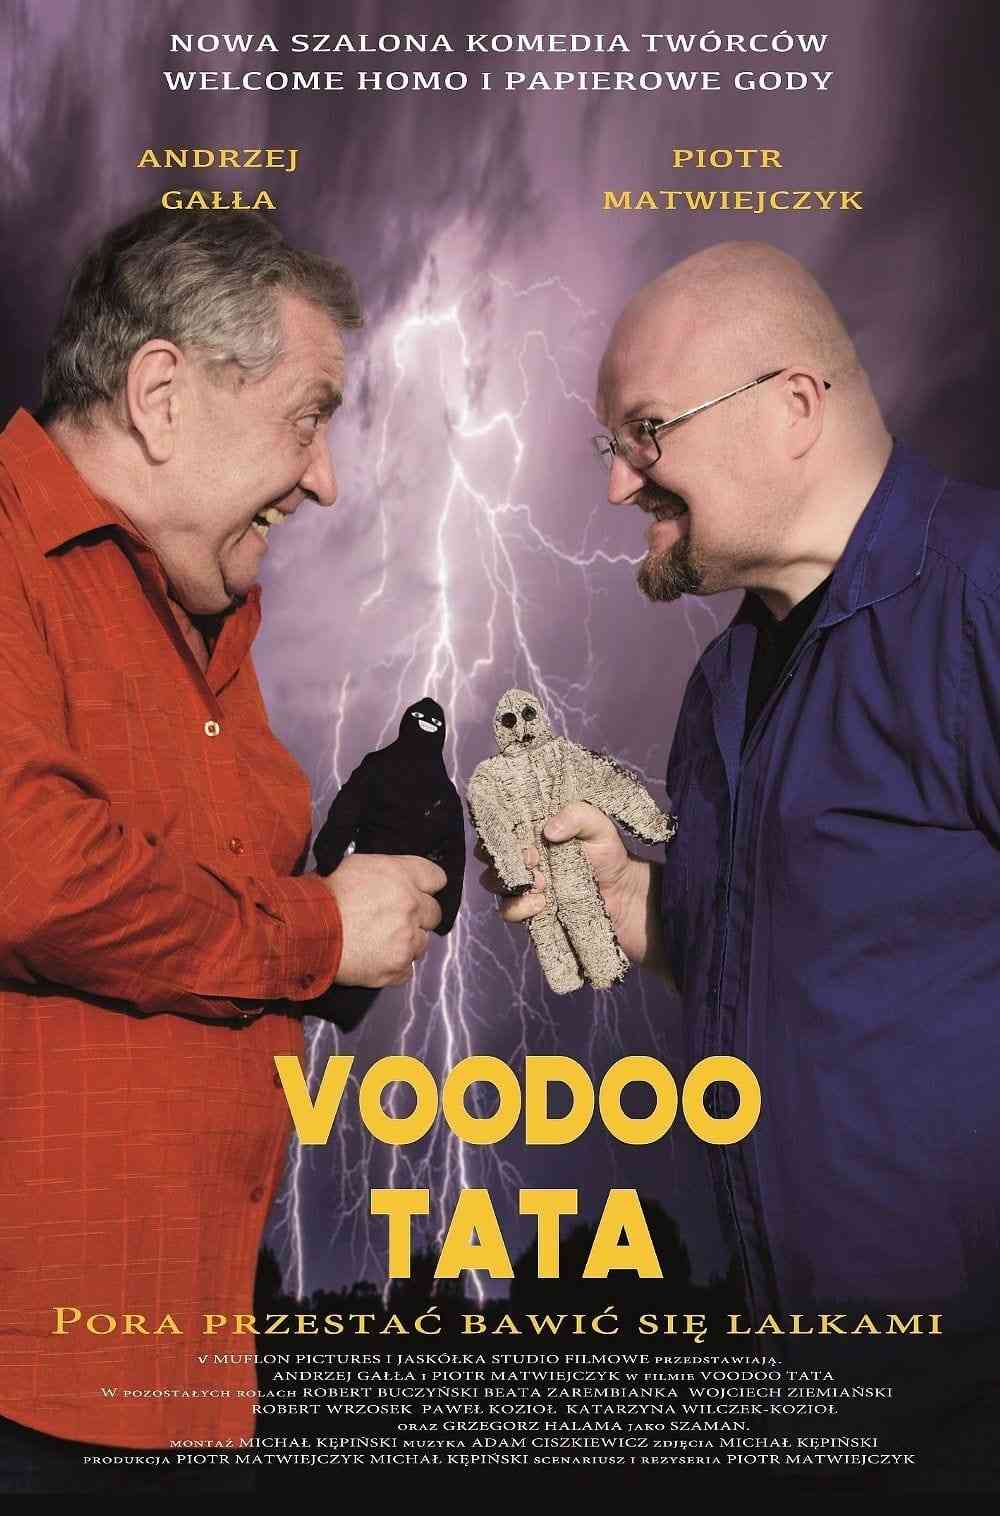 Voodoo tata  (2018),Online za darmo